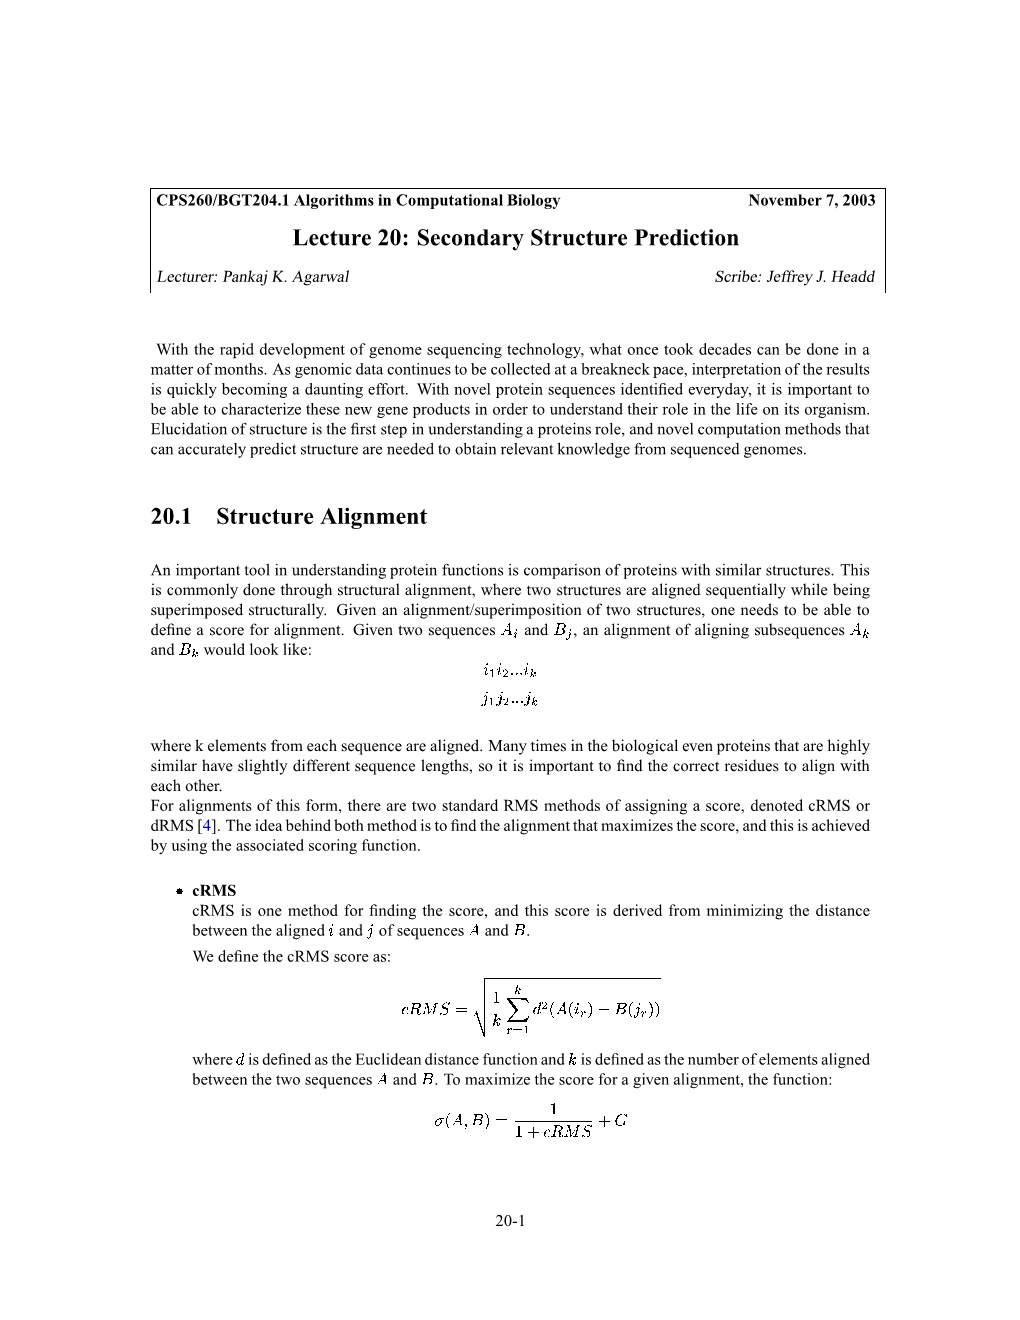 Lecture 20: Secondary Structure Prediction